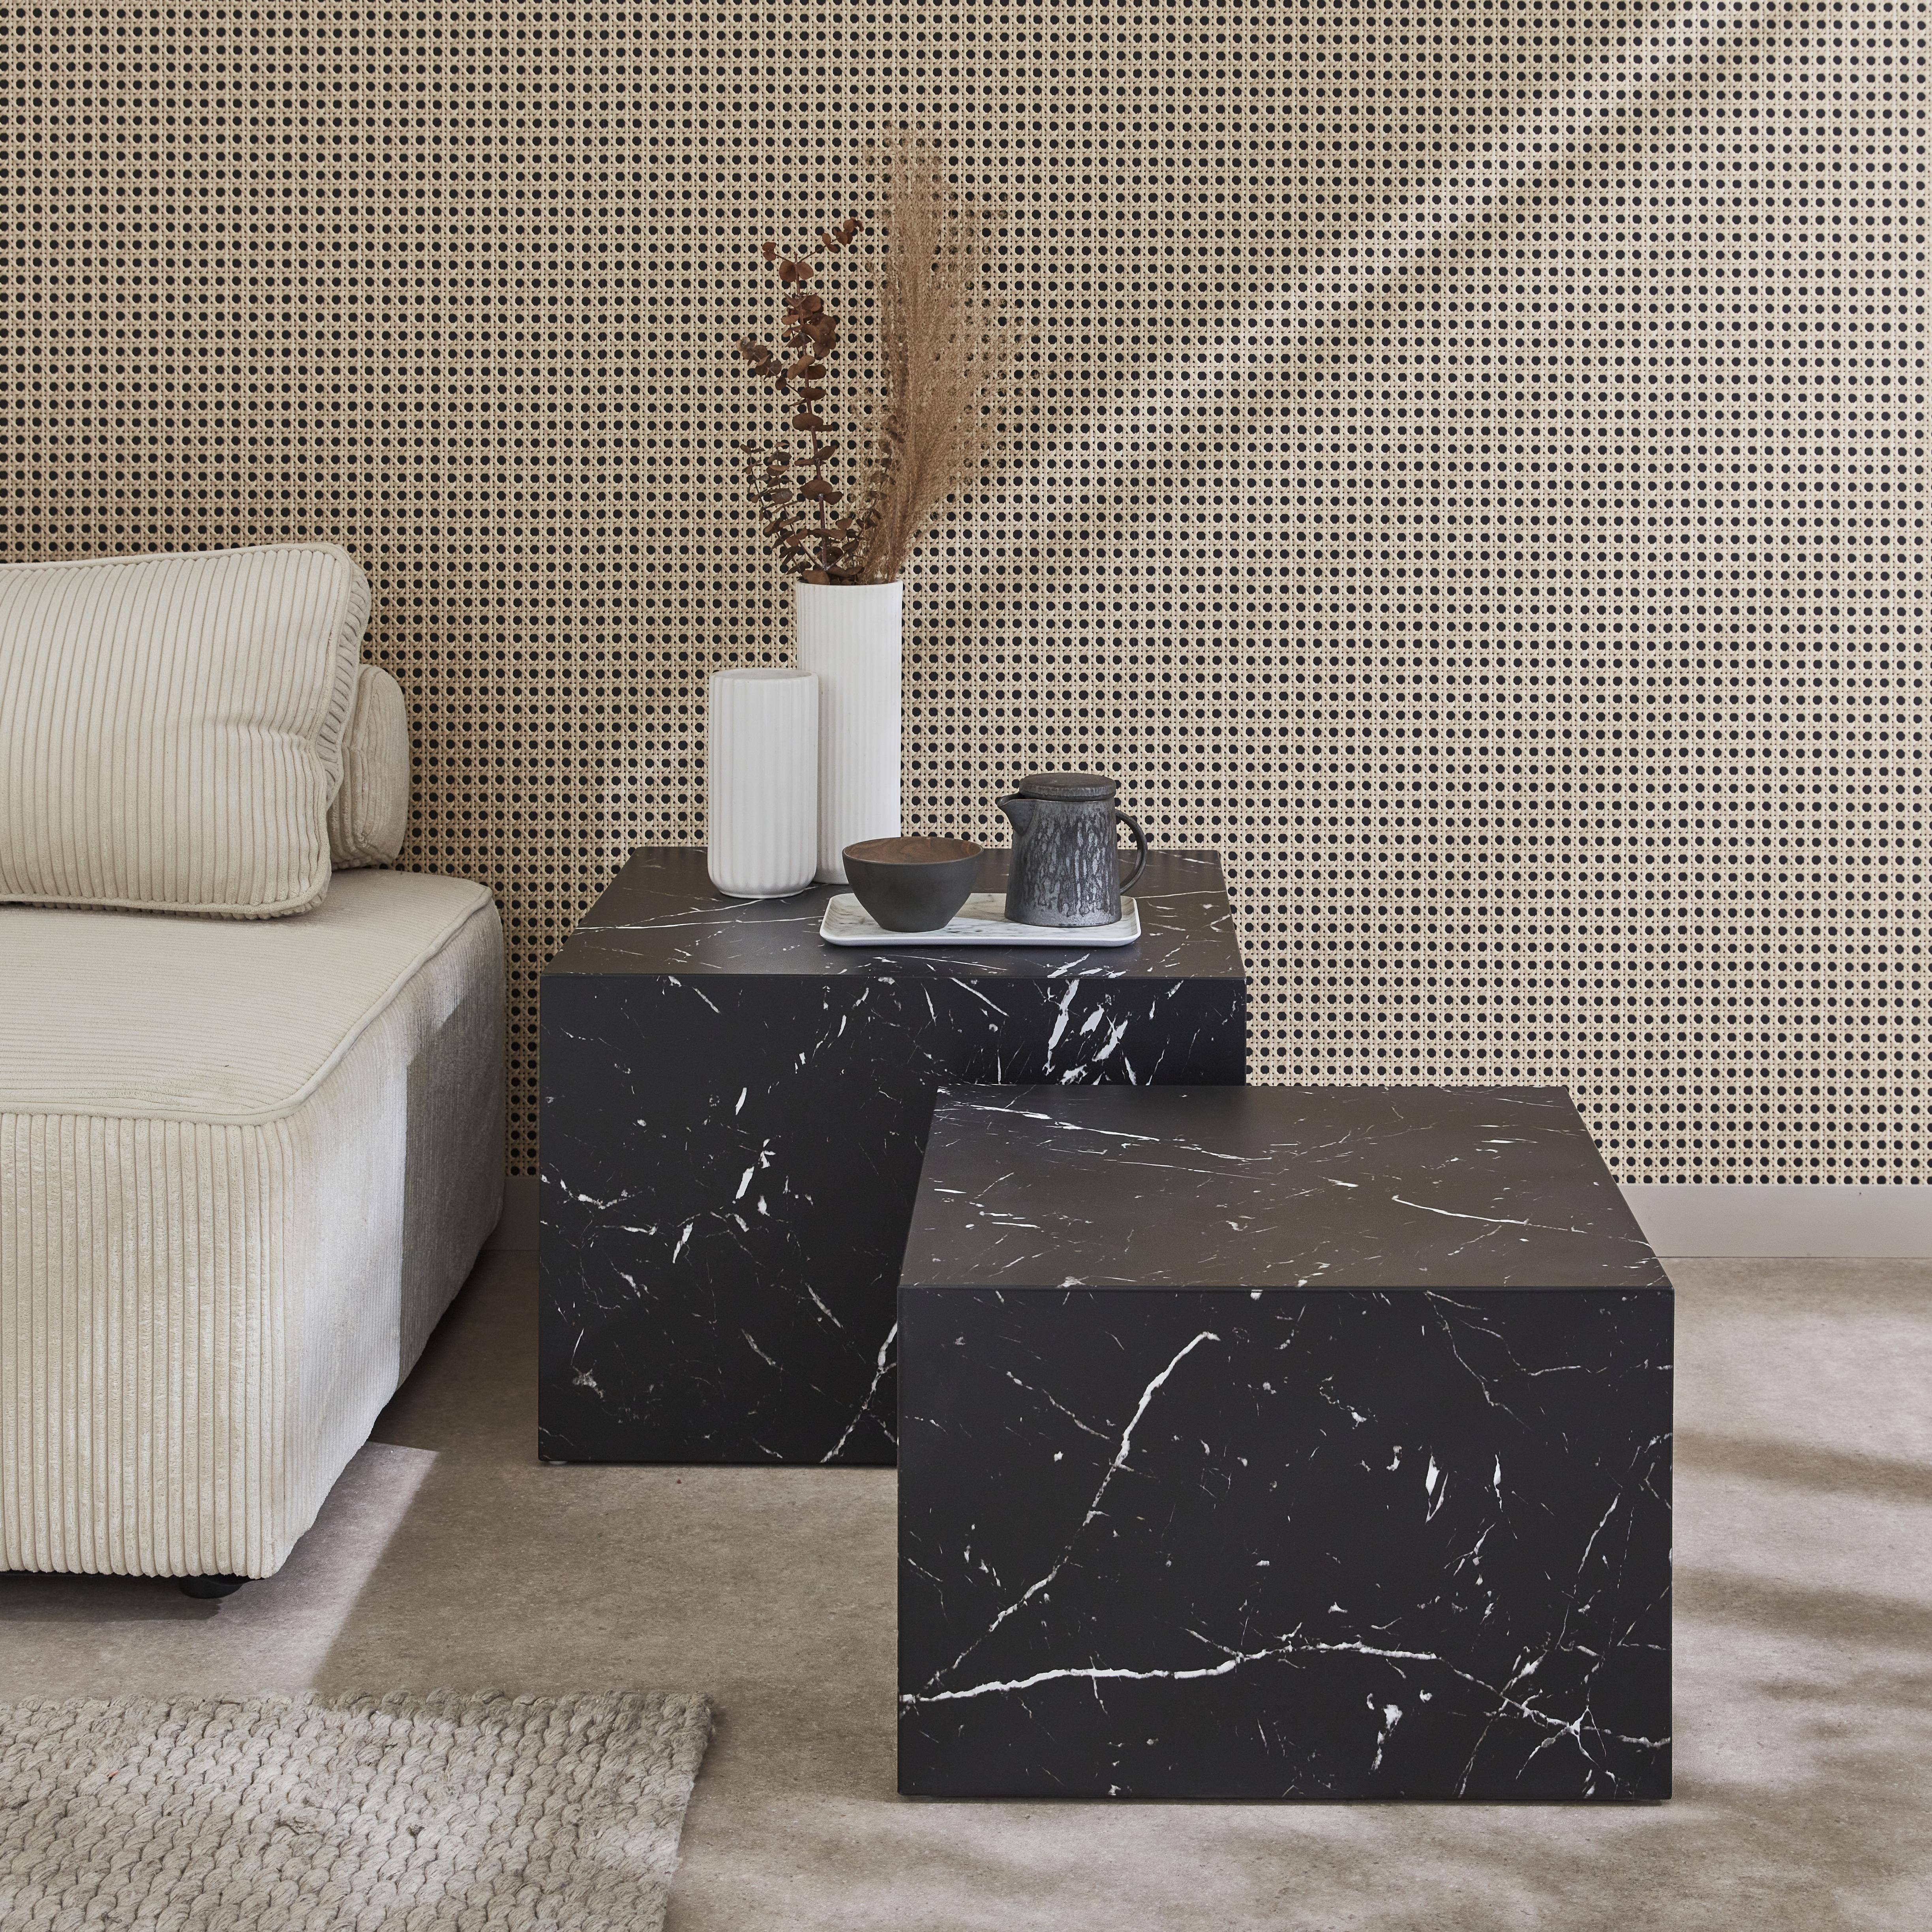 Set of 2 square coffee tables with marble effect, black, L50xW50xH33cm &  L58xW58xH40cm, Paros,sweeek,Photo1